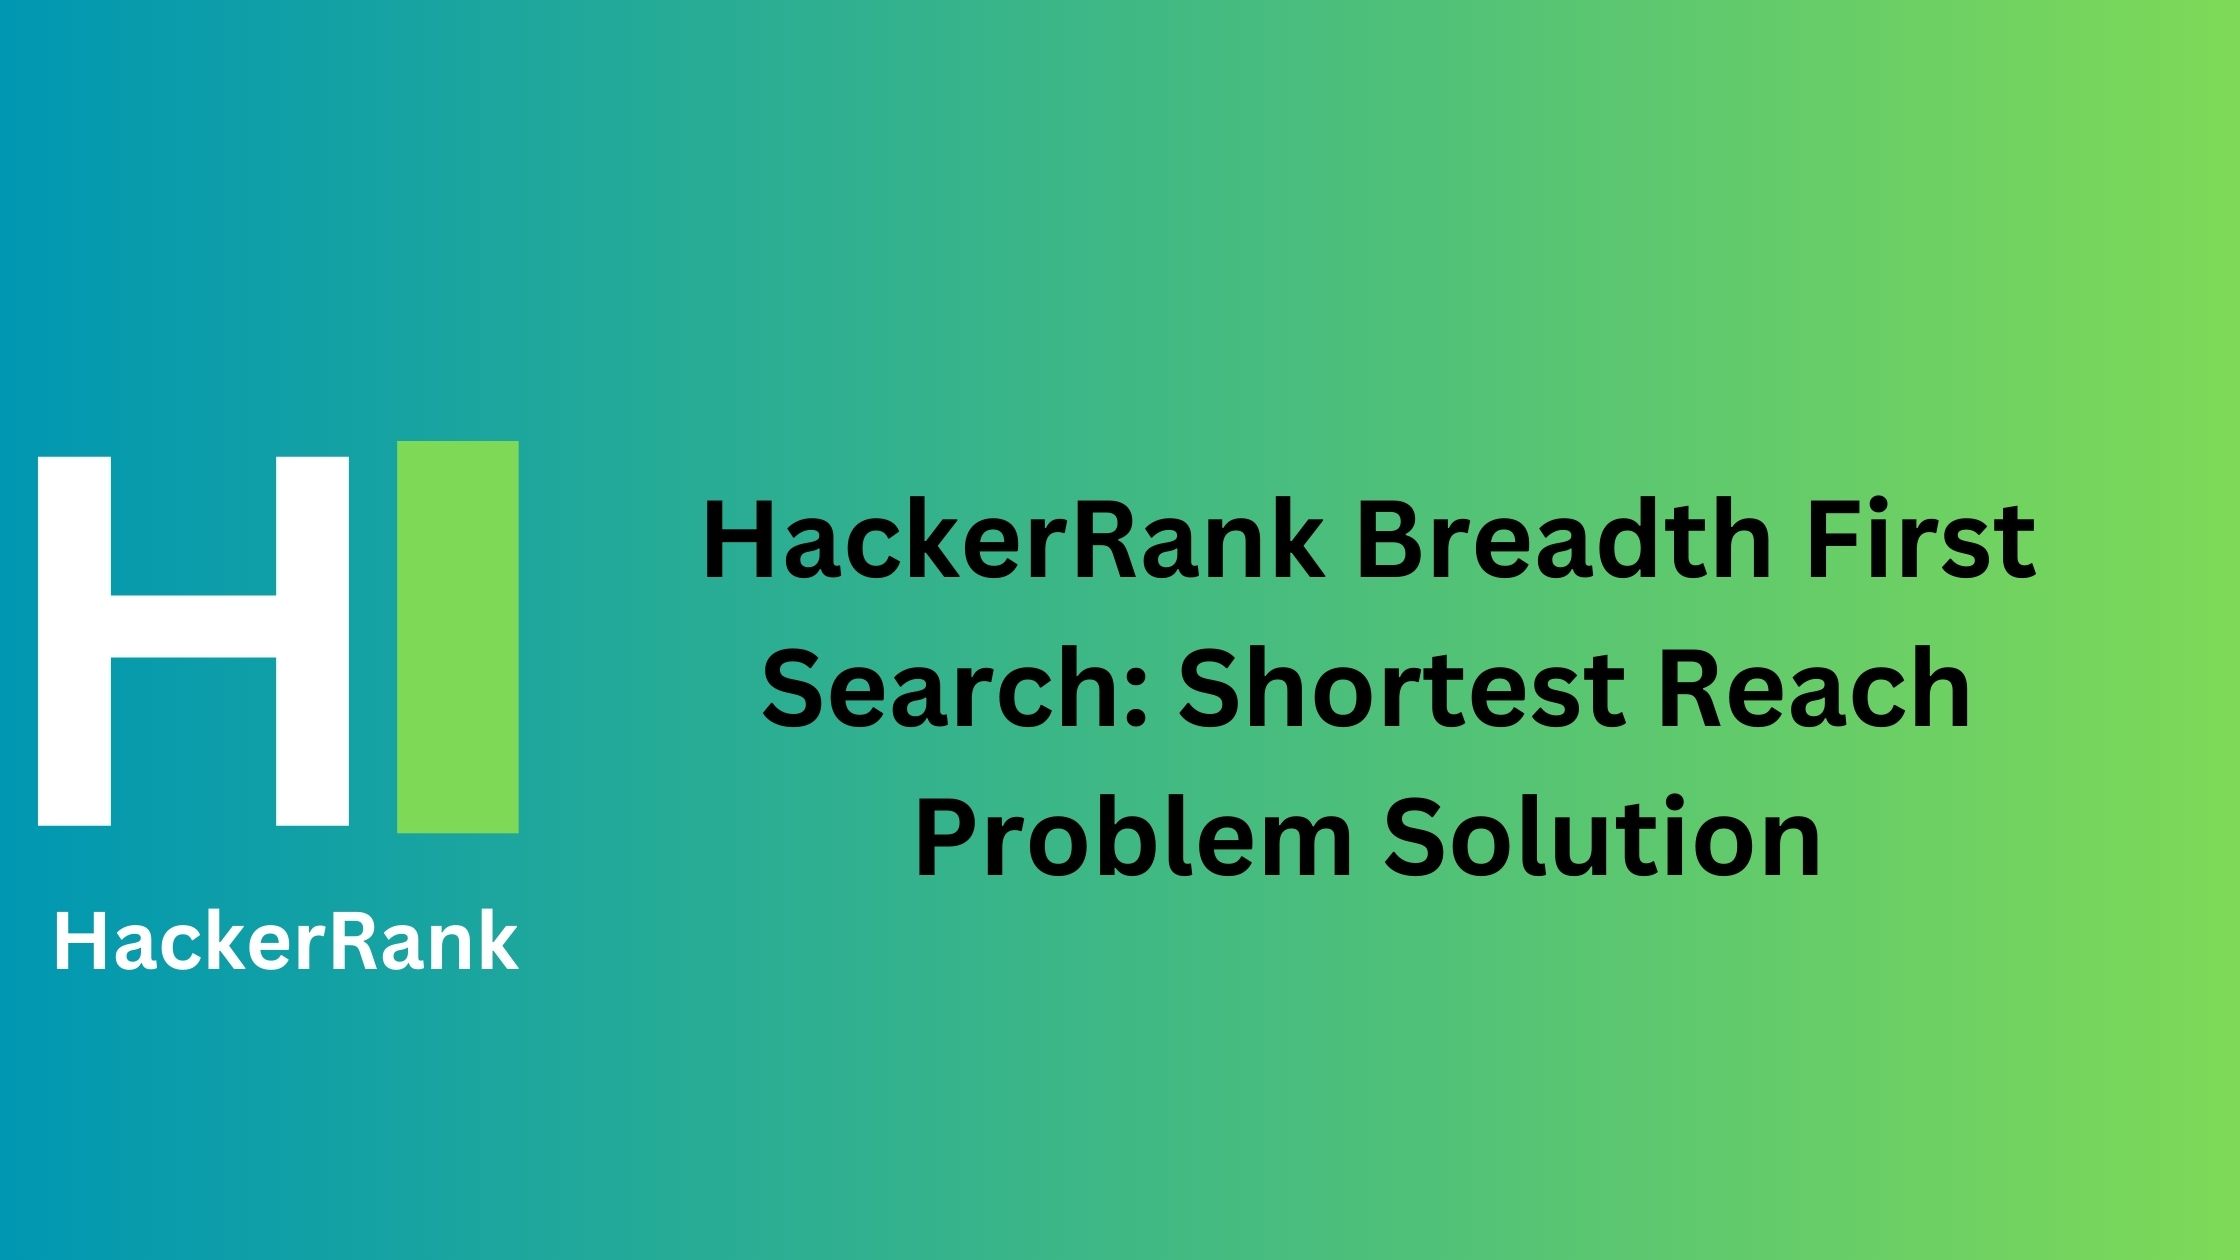 HackerRank Breadth First Search: Shortest Reach Problem Solution